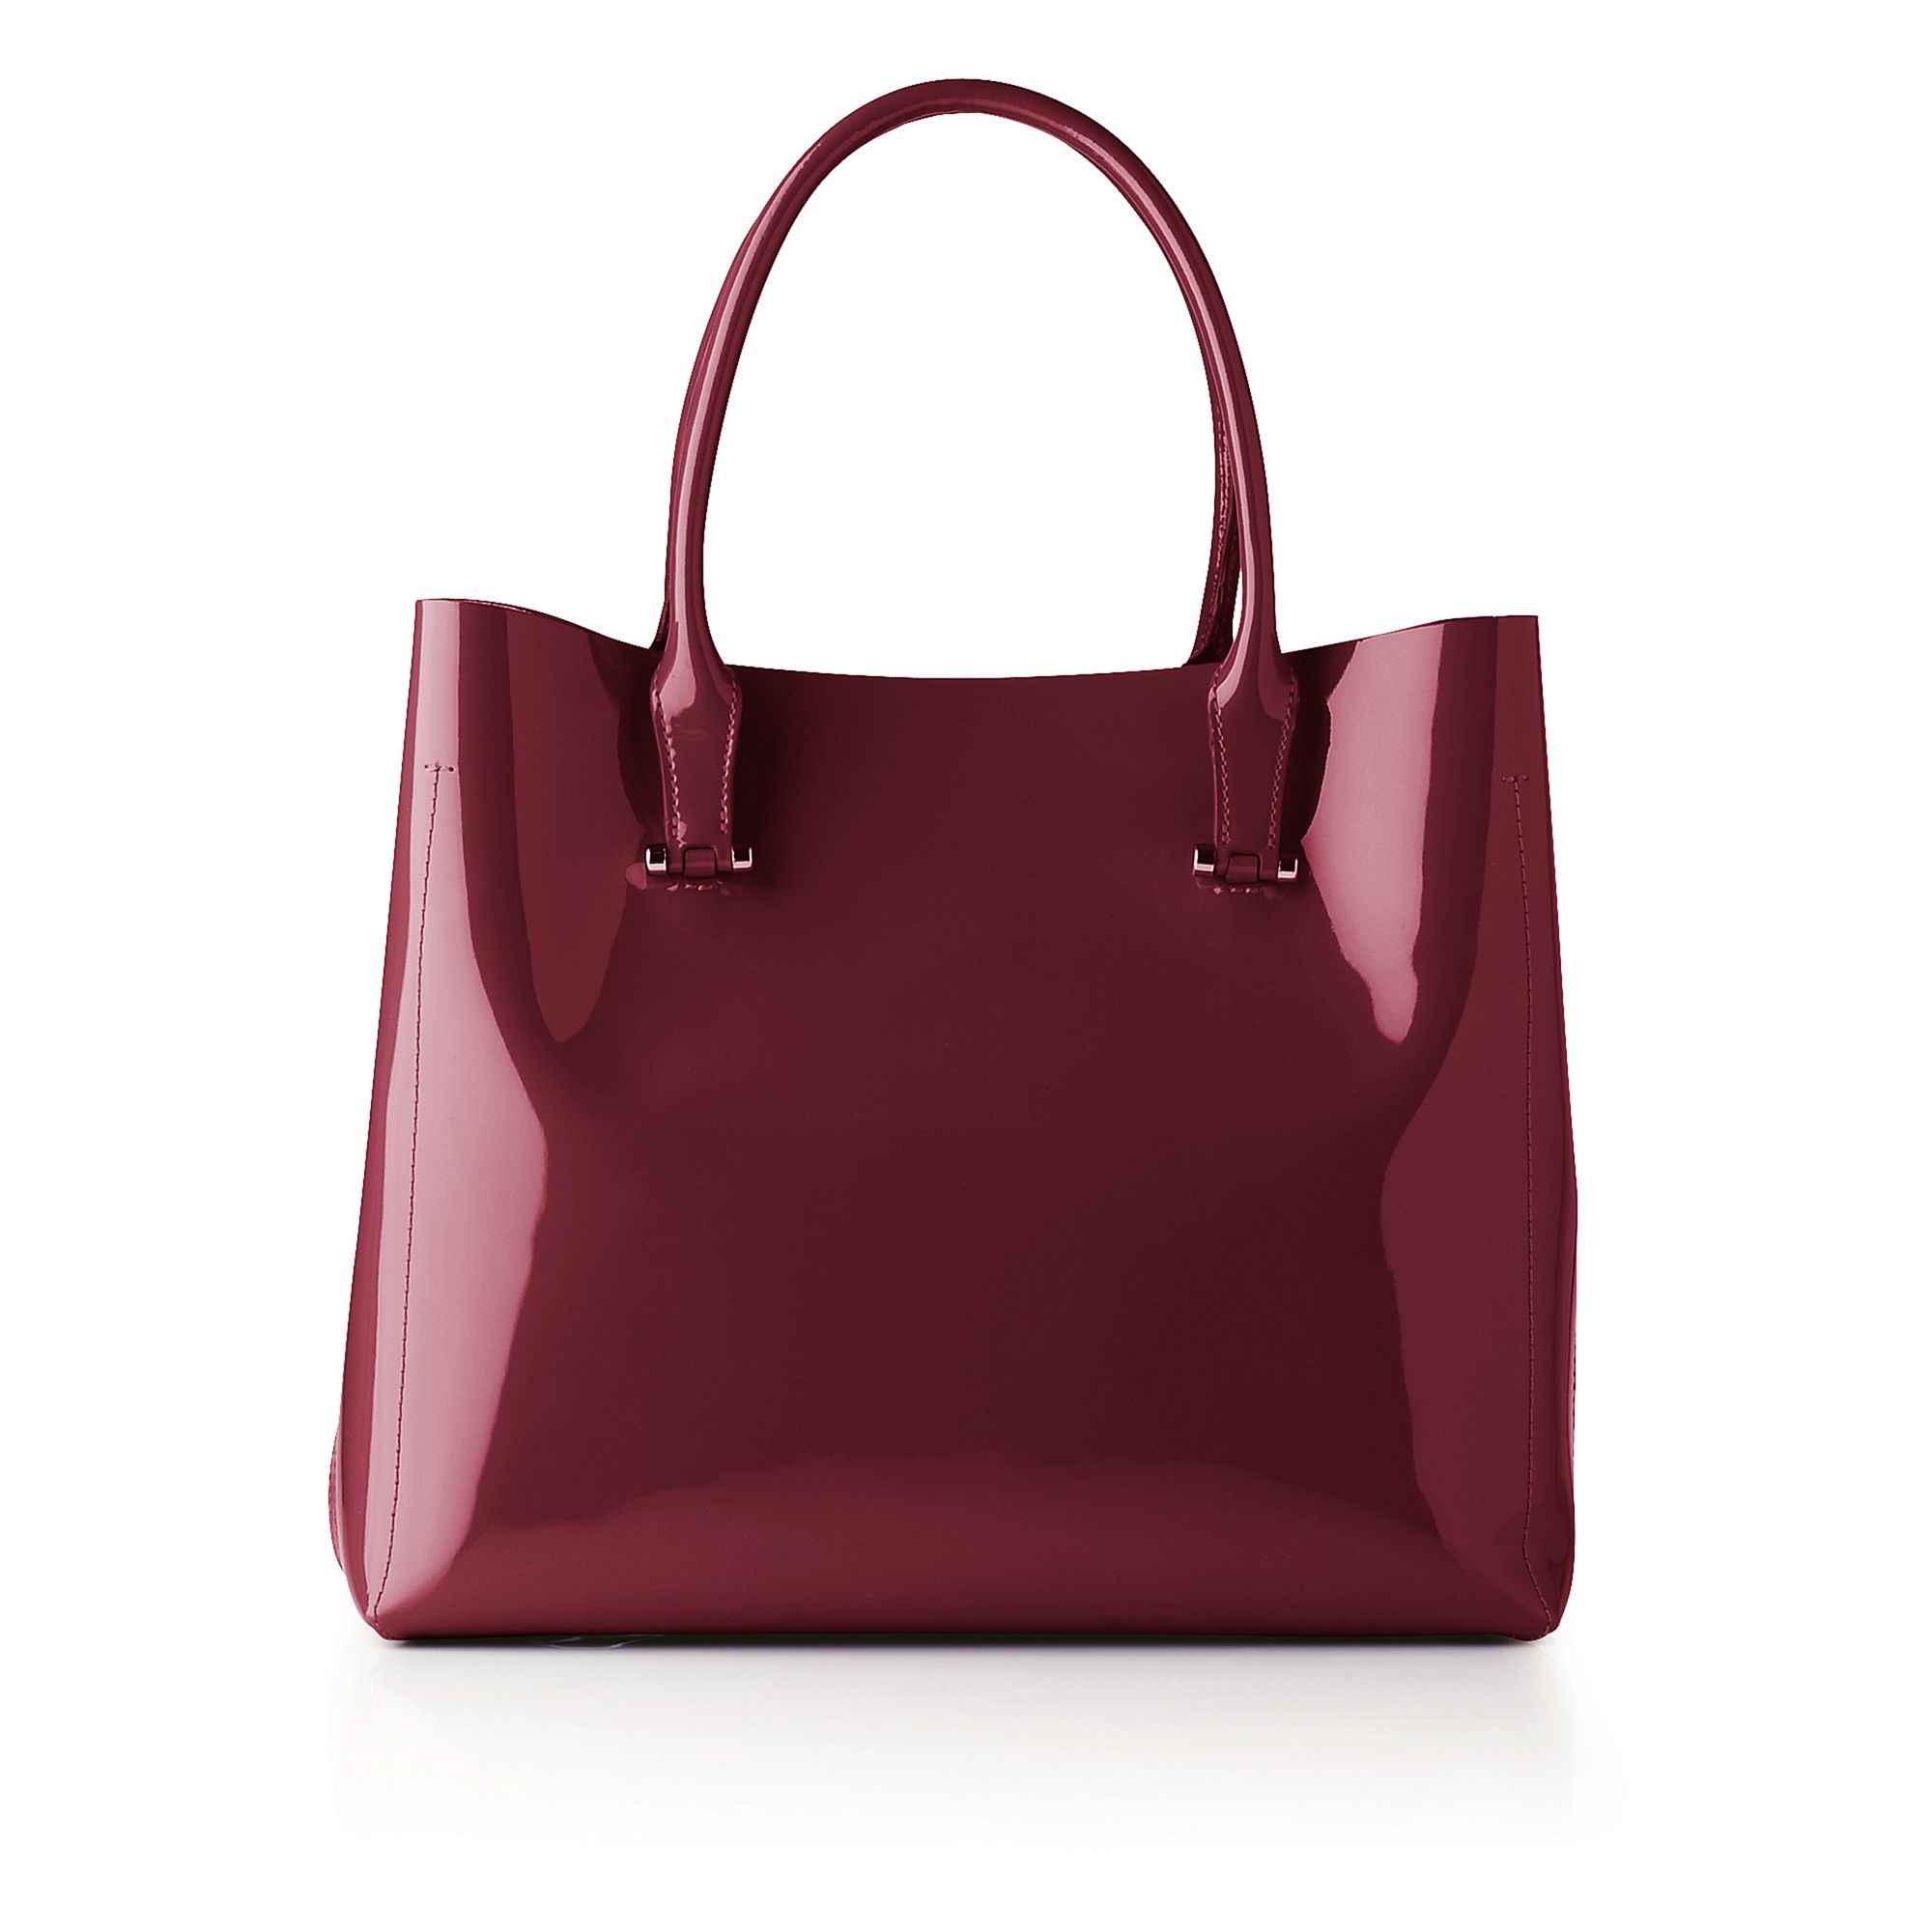 L.k.bennett Crocus Patent Leather Bag in Red (bordeaux) | Lyst